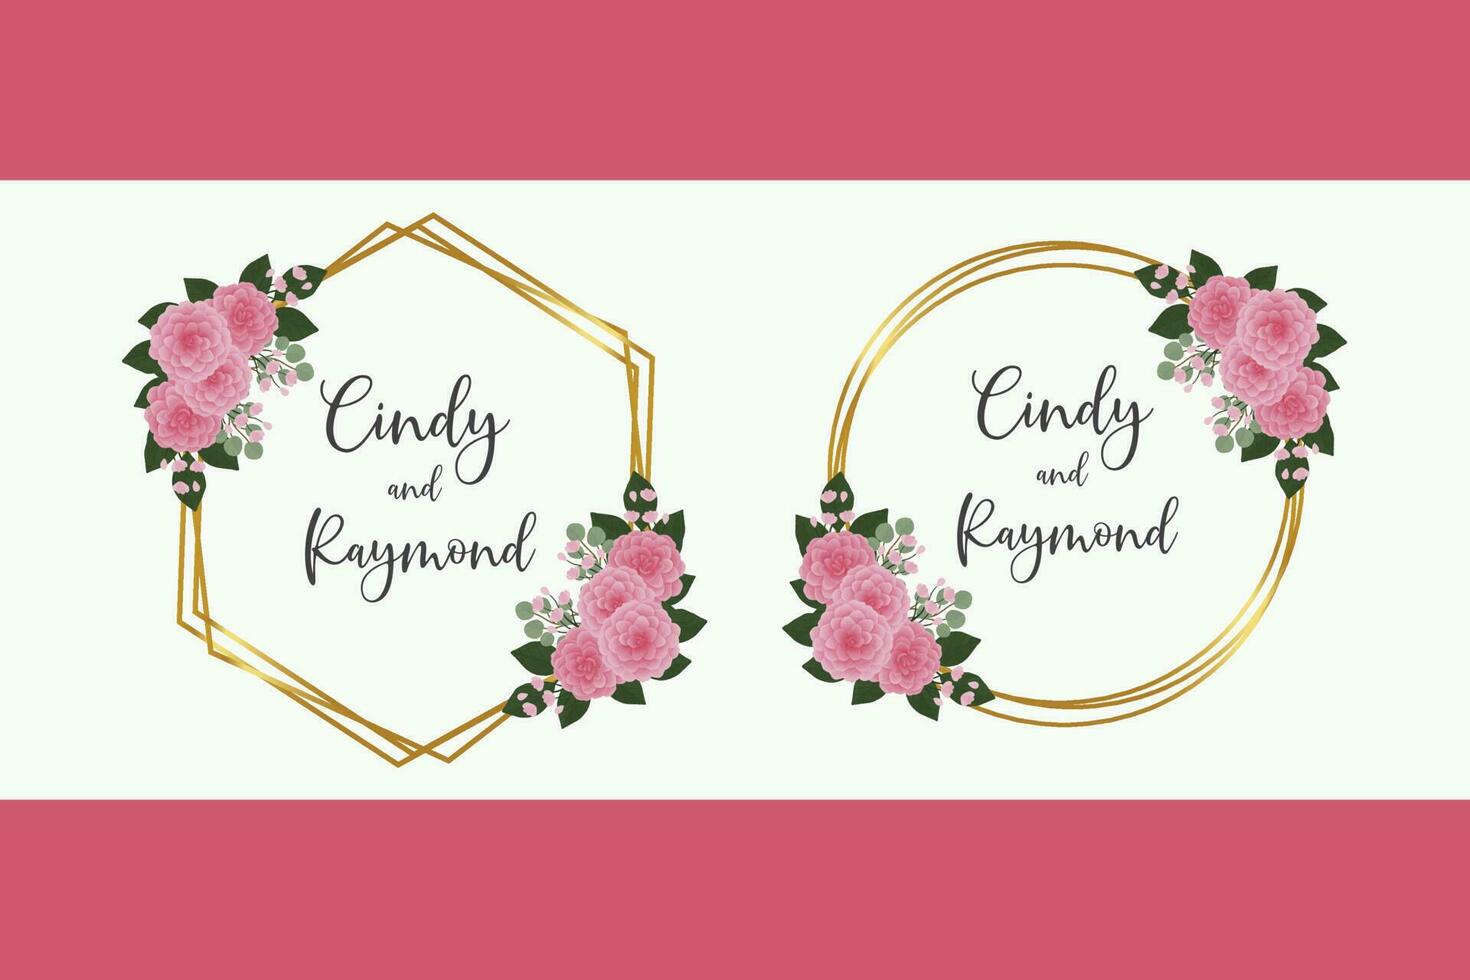 Wedding invitation frame set, floral watercolor Digital hand drawn Pink Dahlia Flower design Invitation Card Template vector